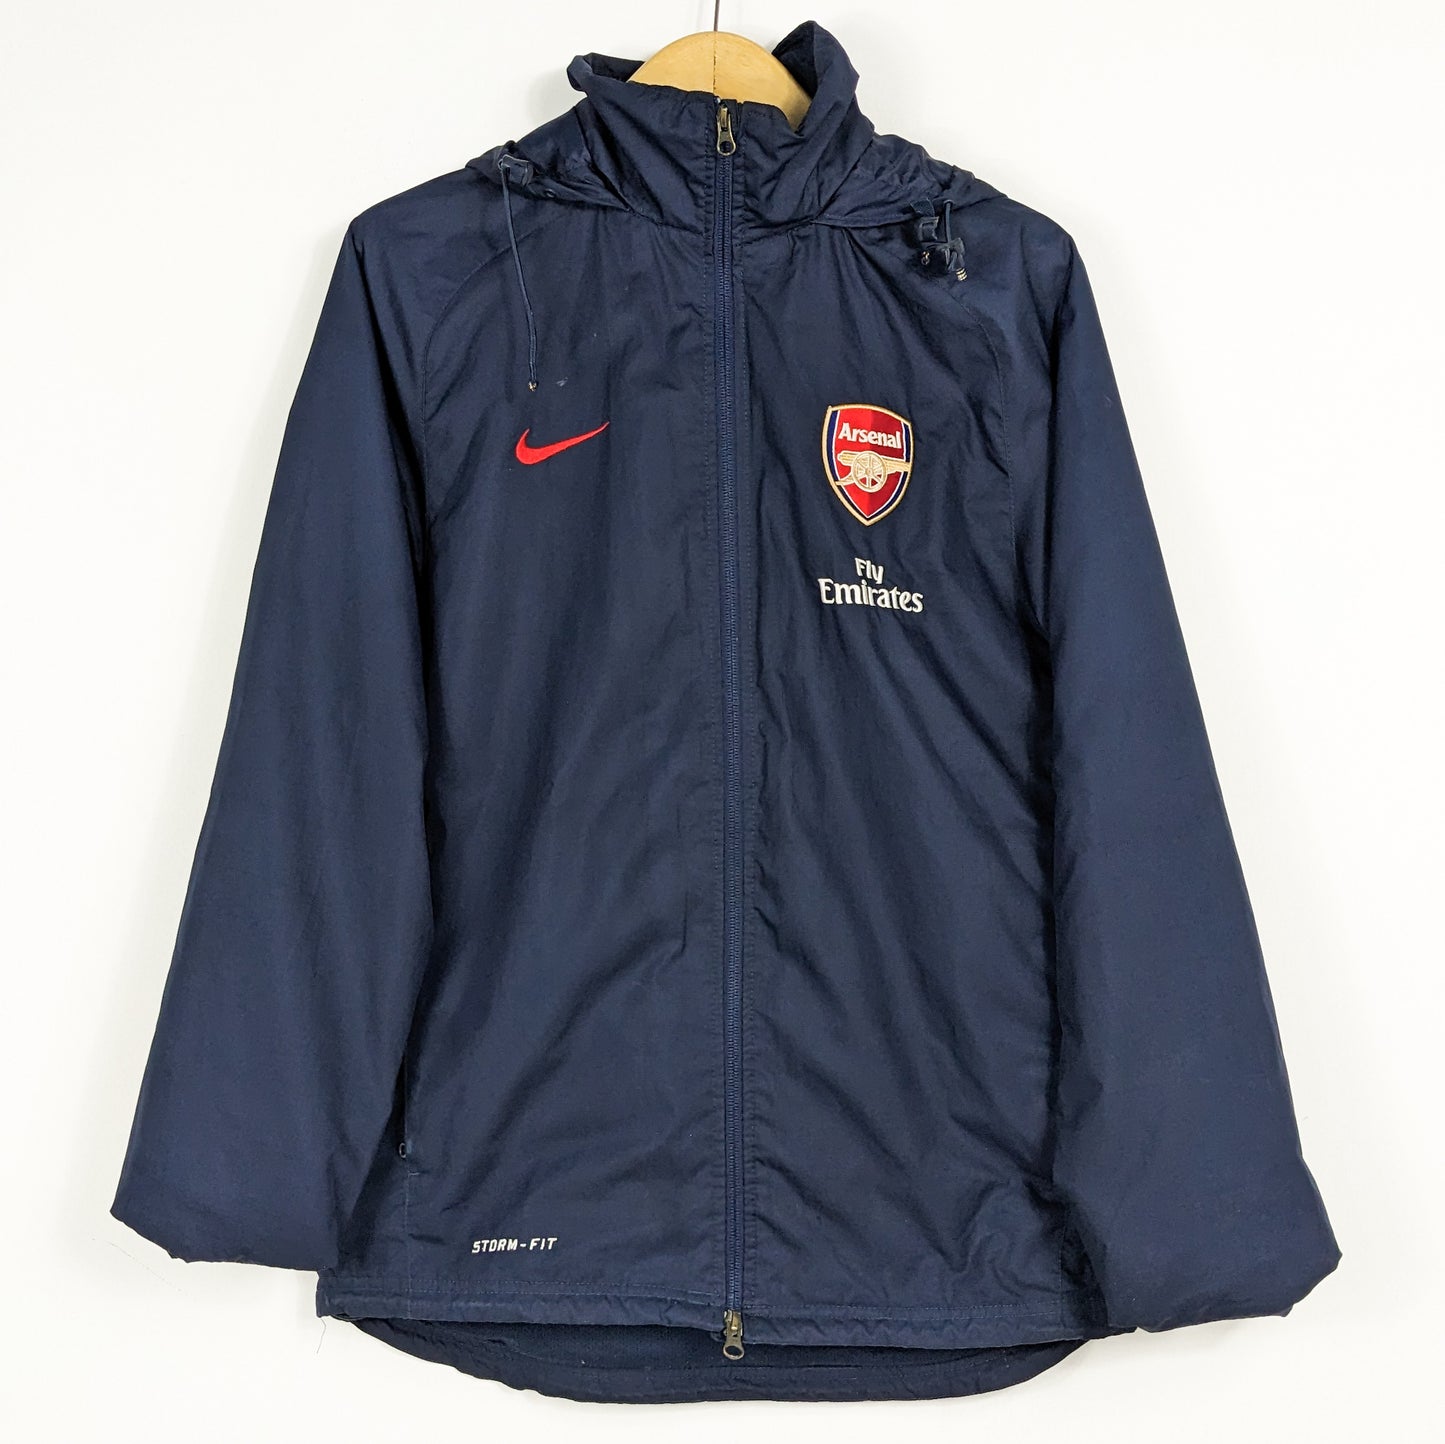 Authentic Arsenal Nike Storm-fit Jacket - Size S fit L